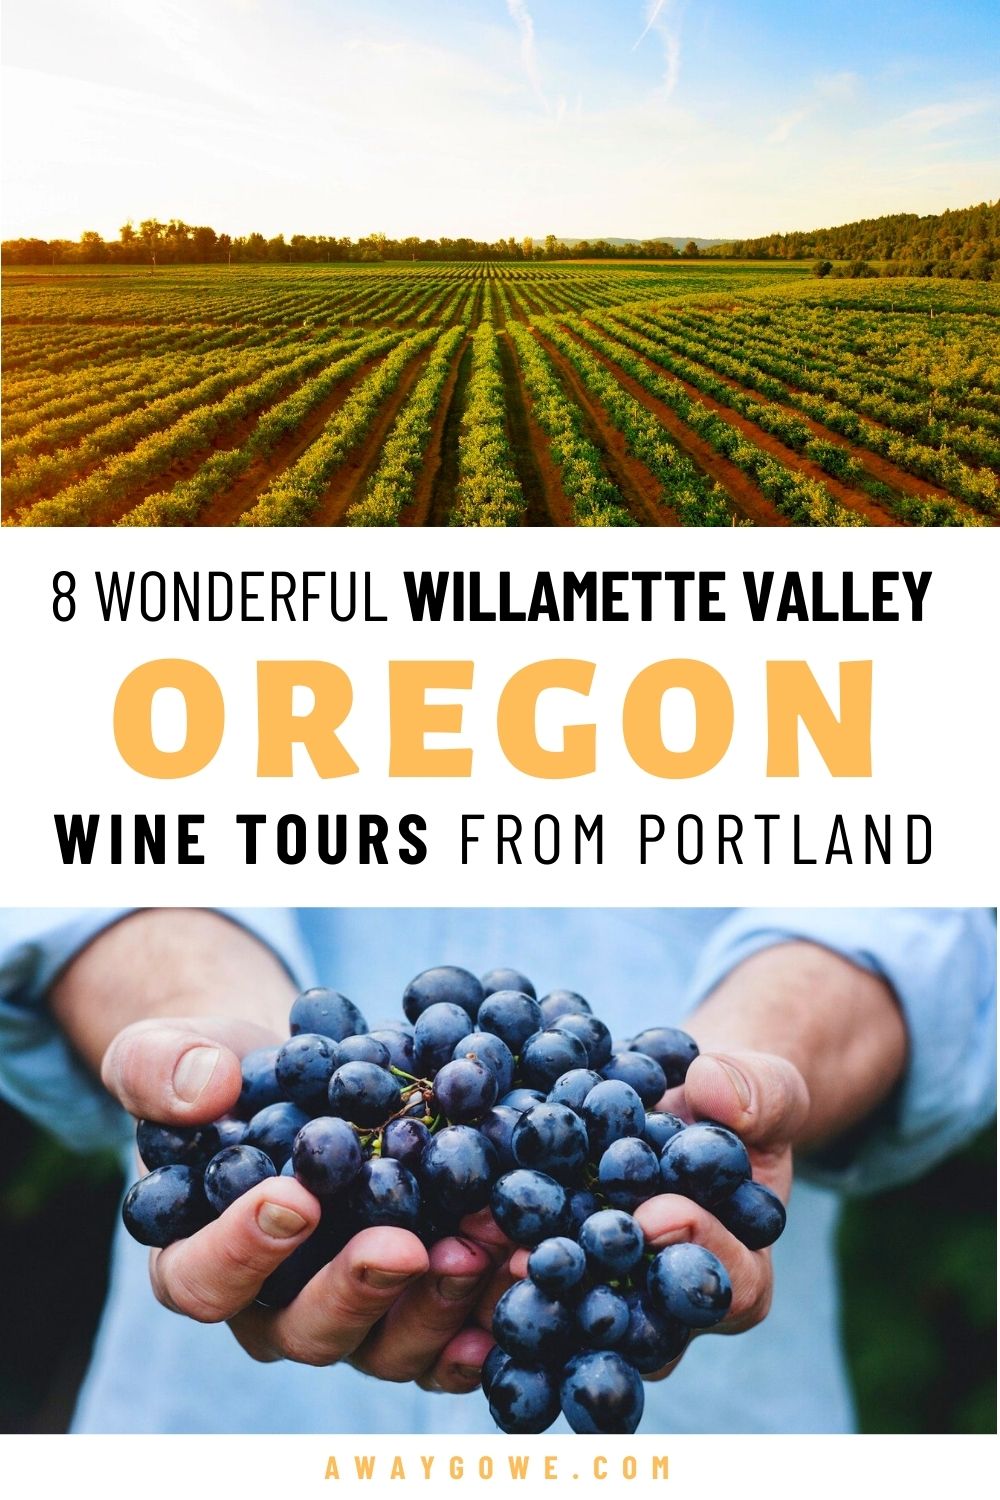 Willamette Valley Wine Tours